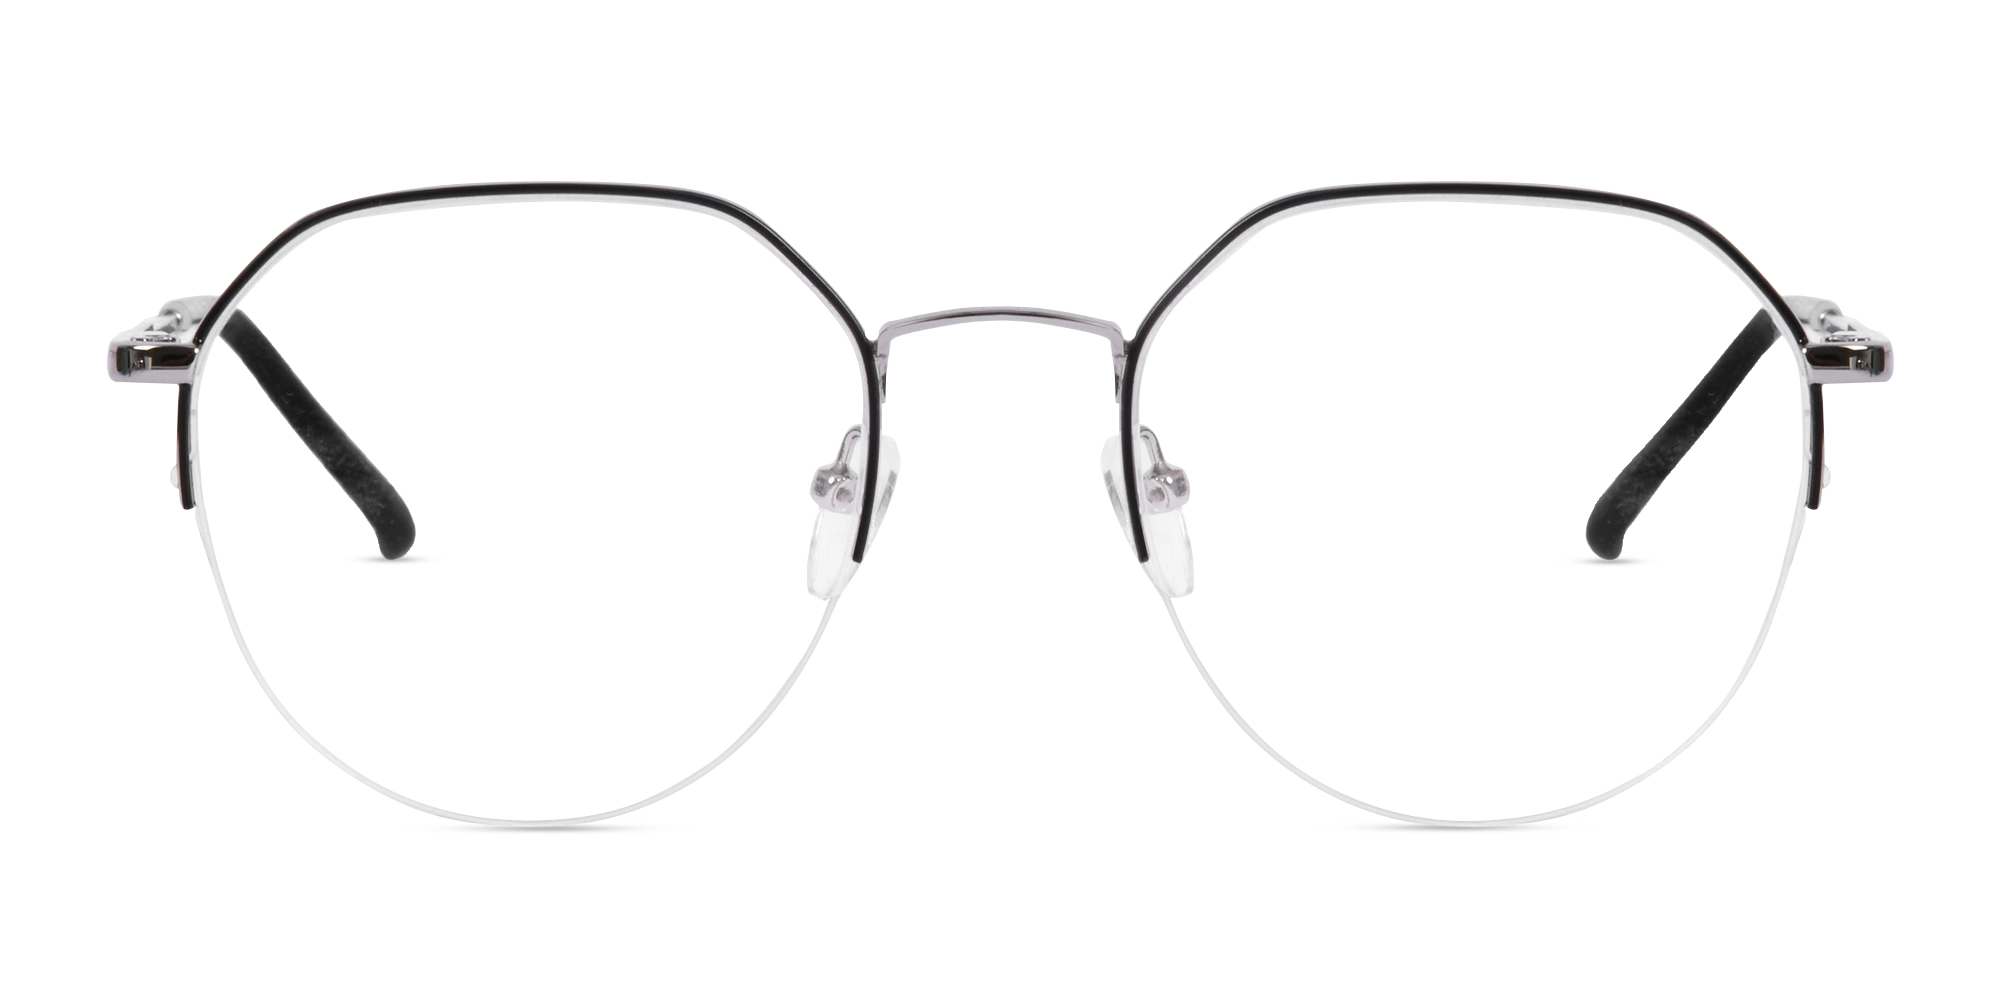 Half Rimless Glasses Frames